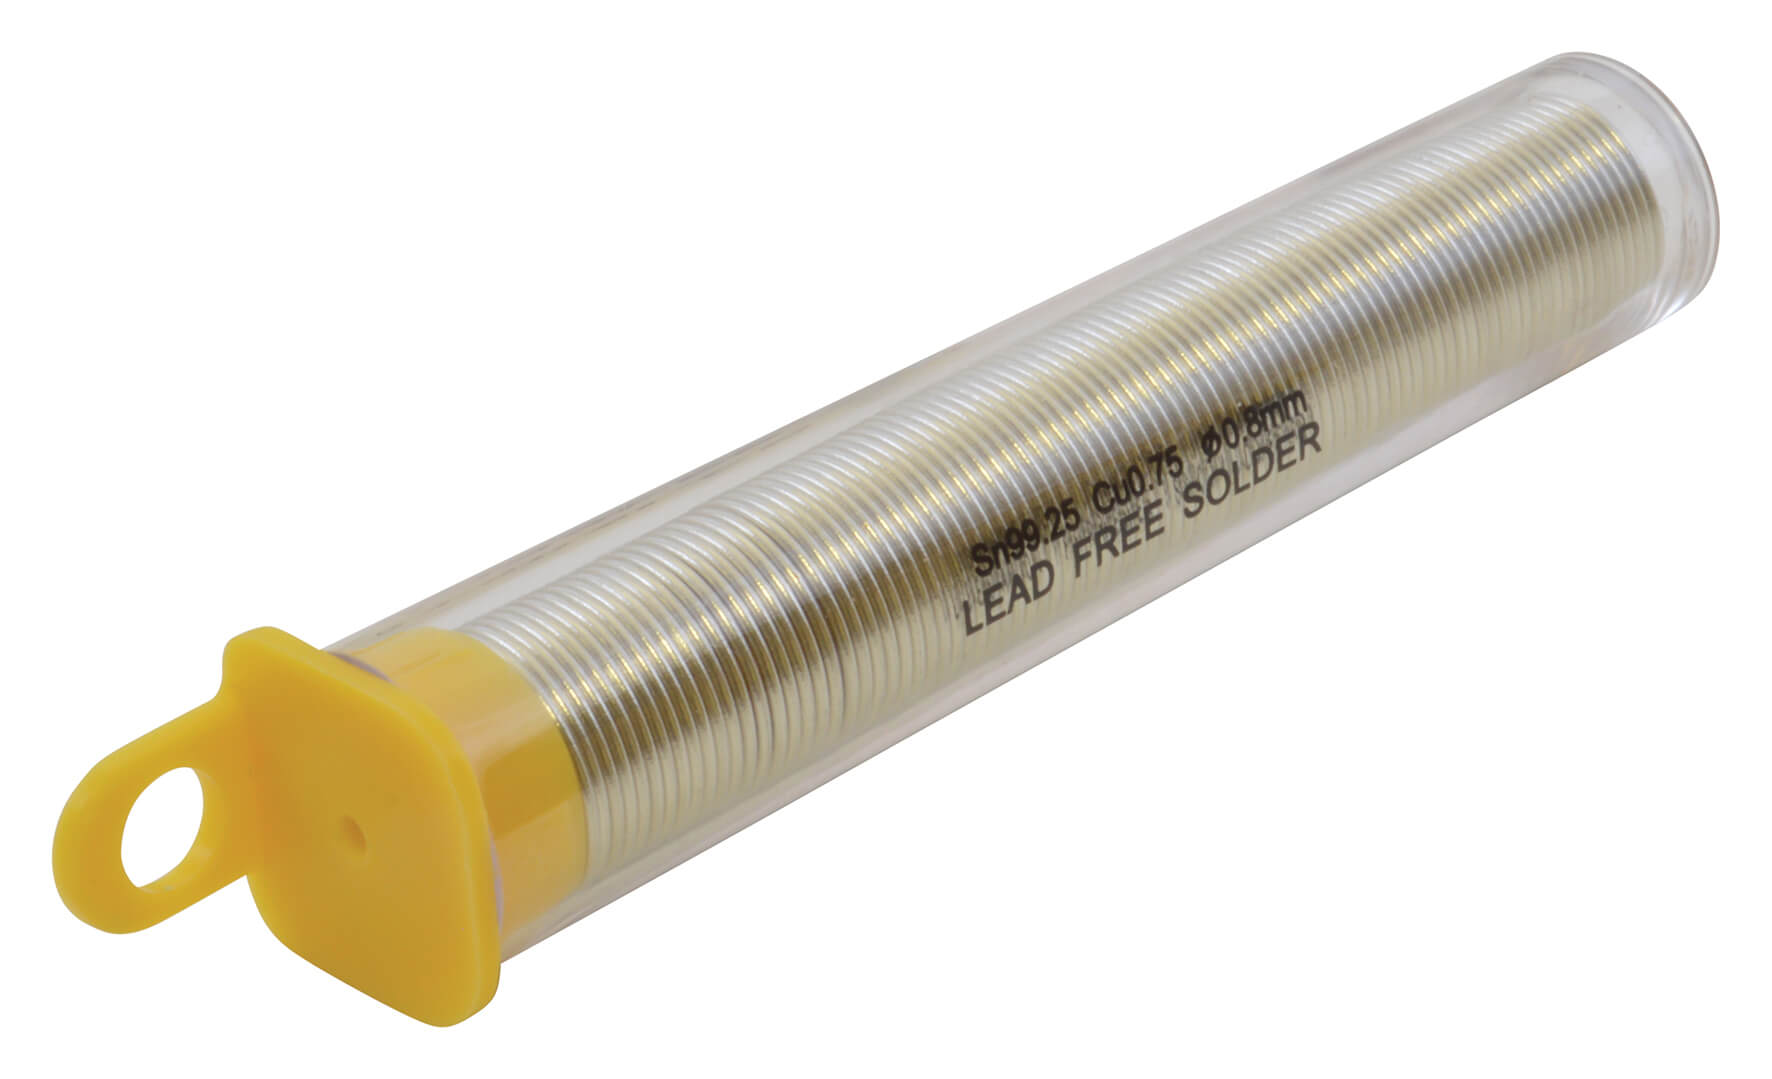 Antex Lead-Free Solder 0.8mm x 4m